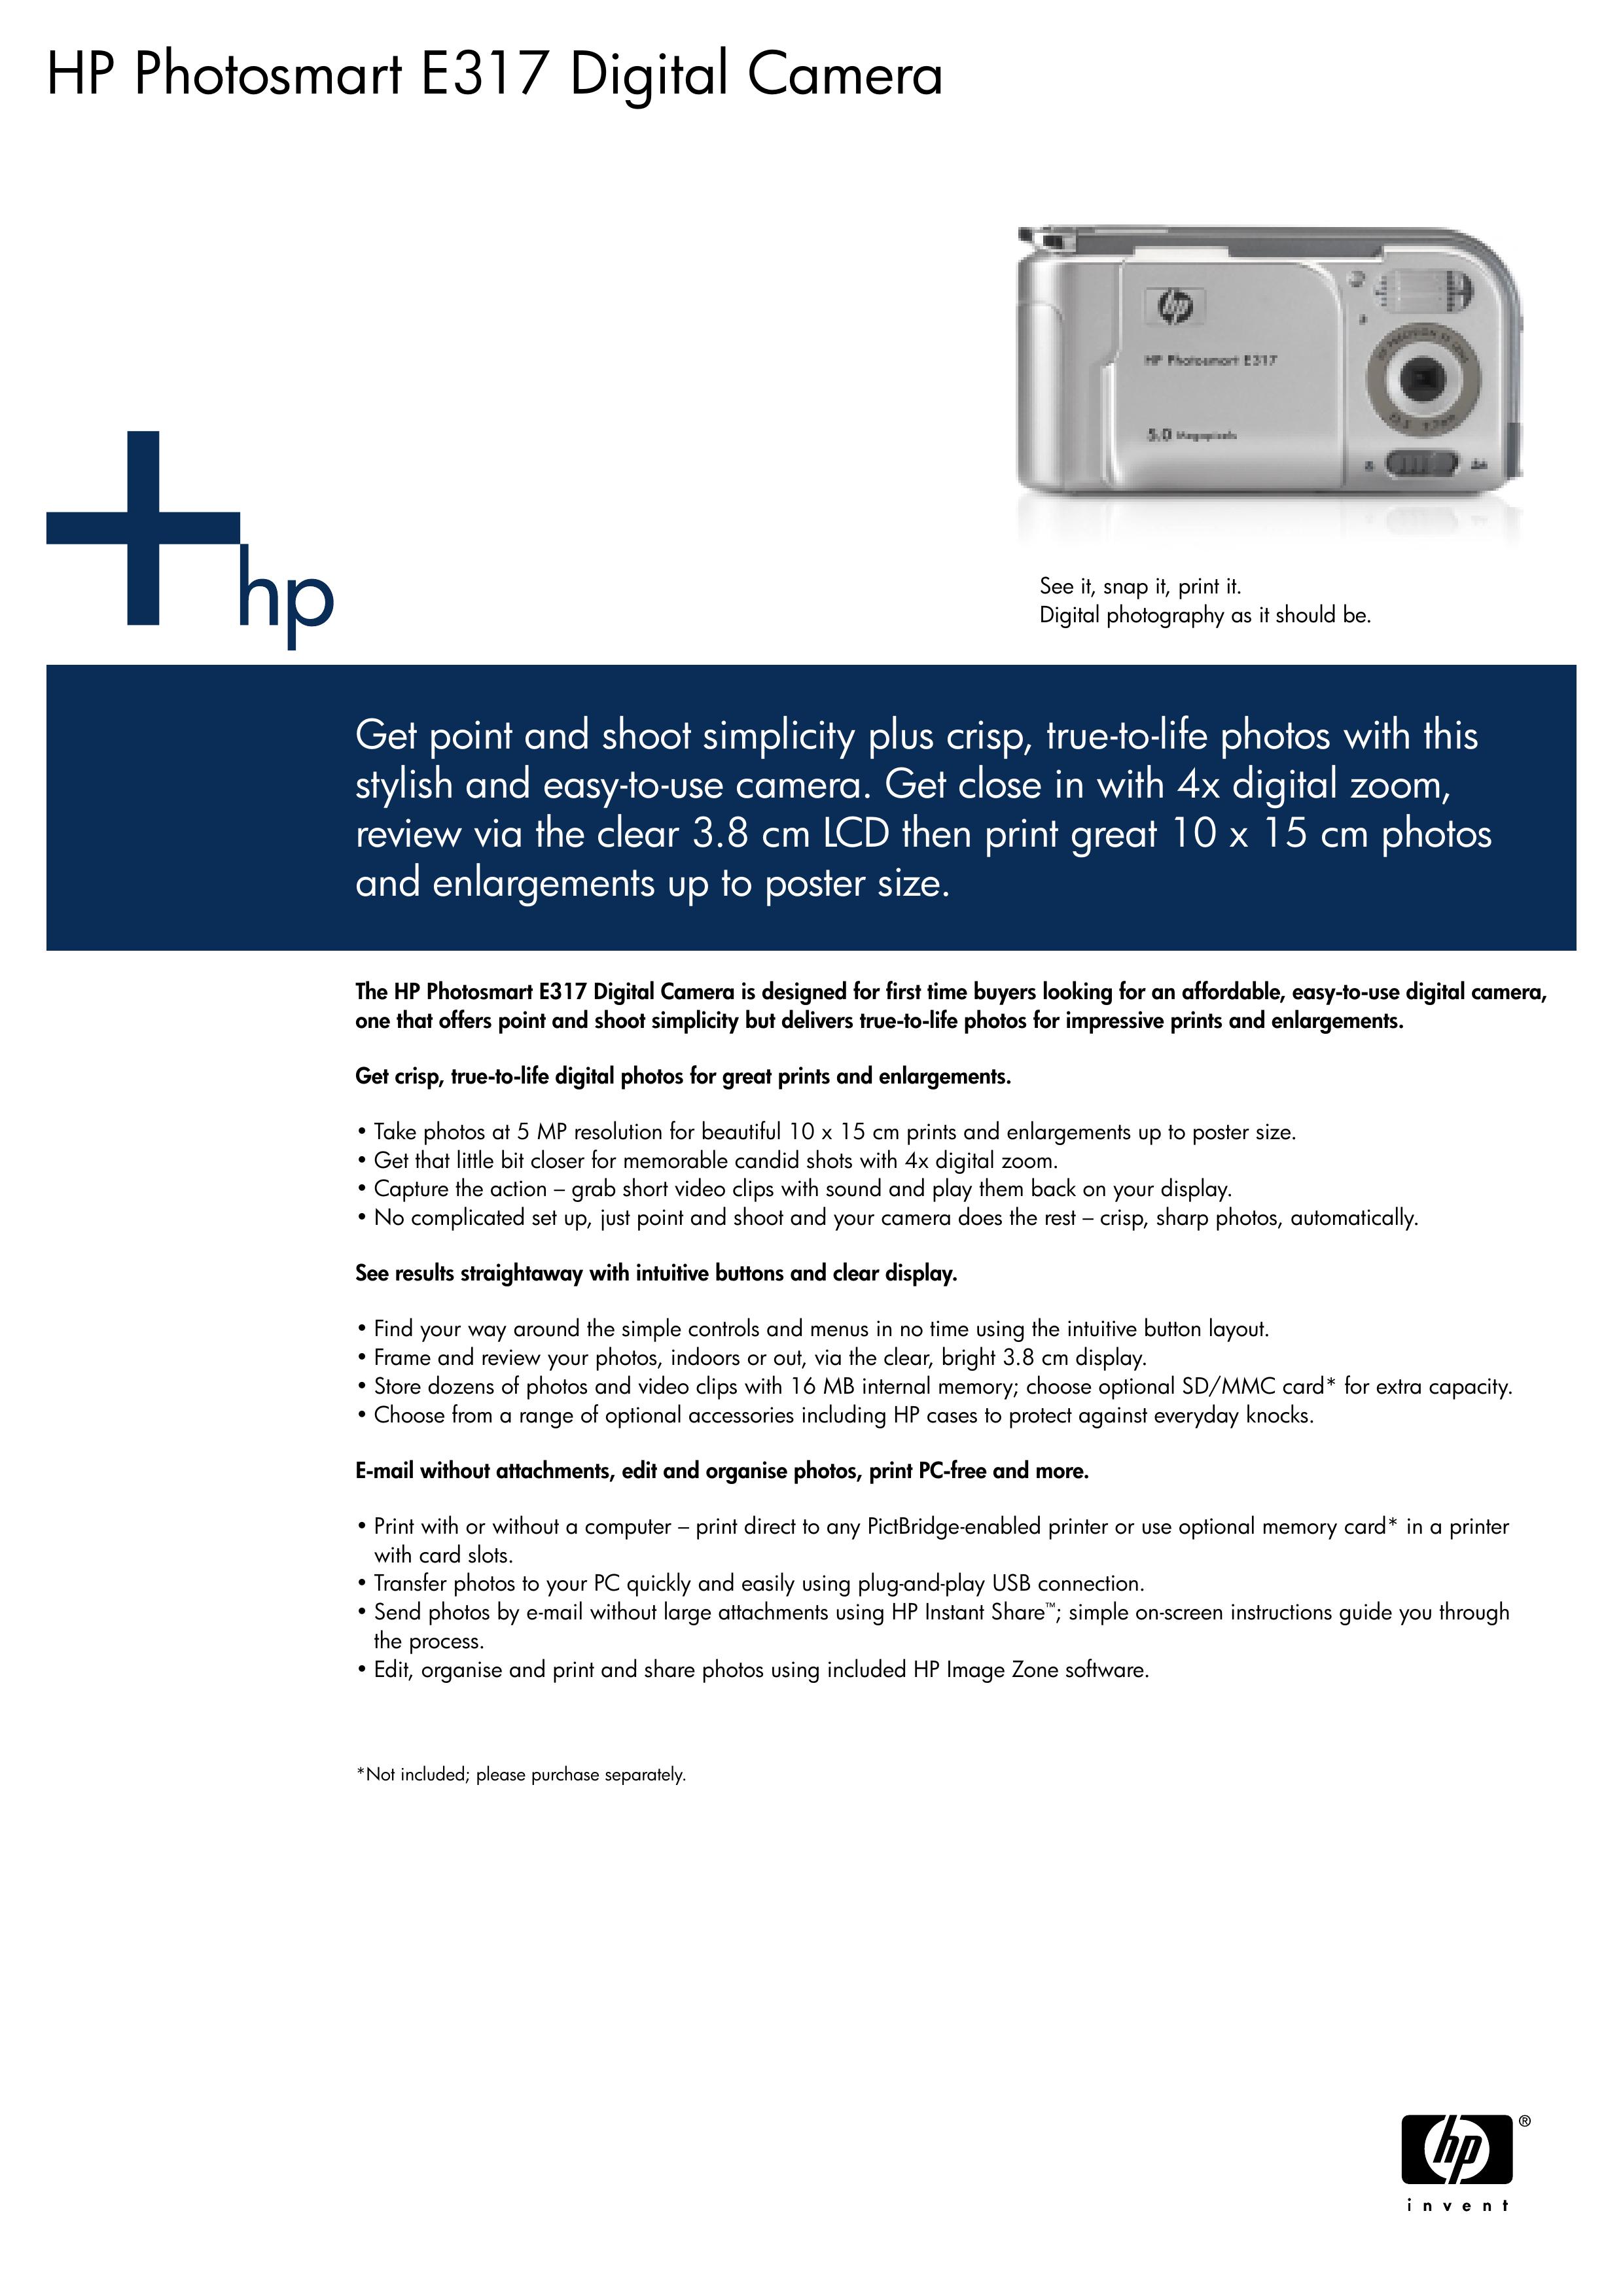 HP (Hewlett-Packard) E317 Digital Camera User Manual